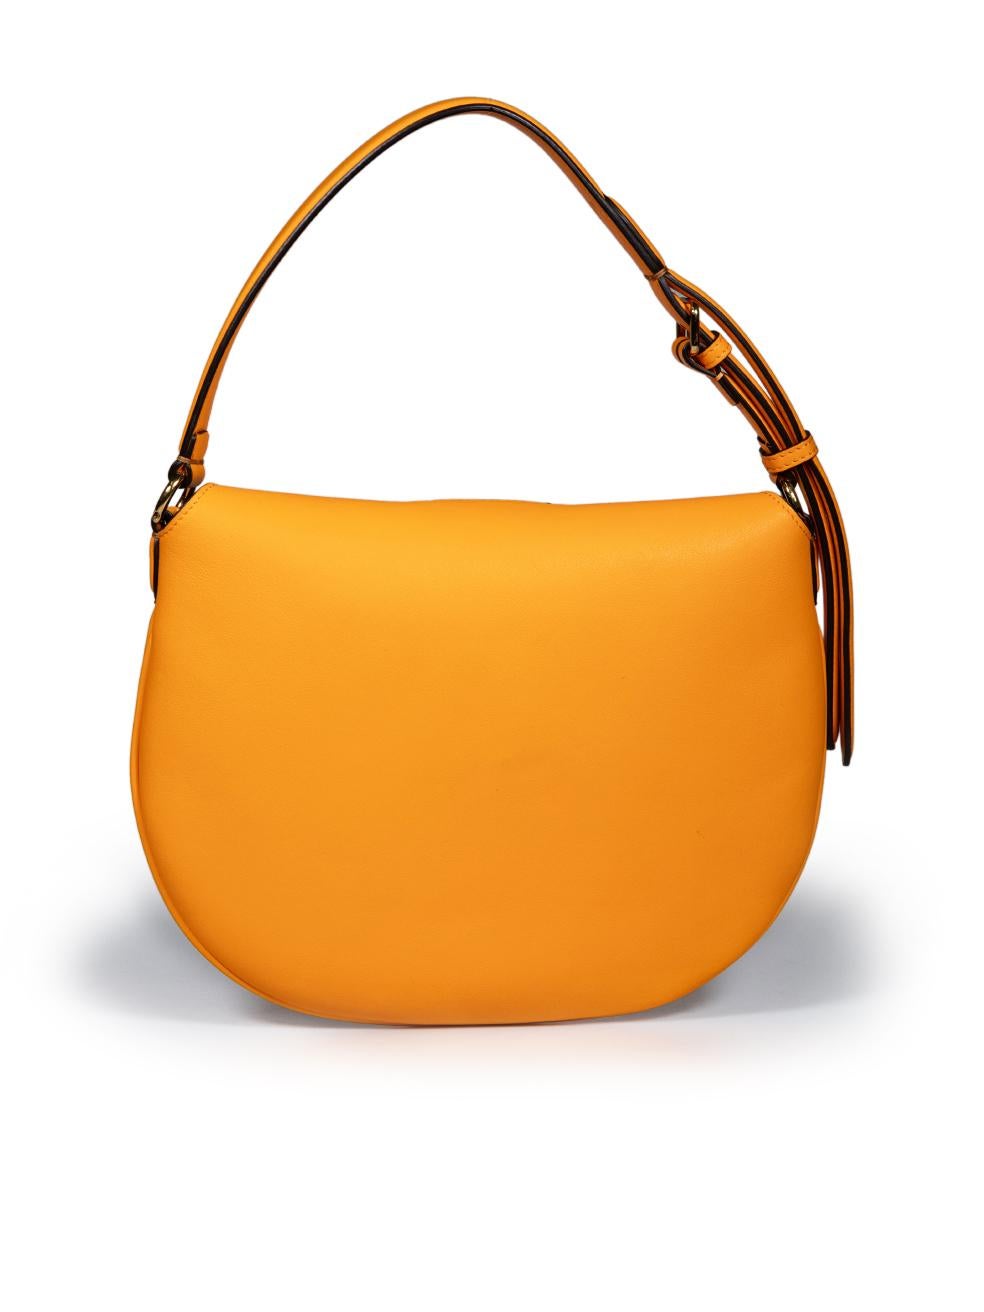 Fendi Orange Leather Croissant Shoulder Bag In Excellent Condition For Sale In London, GB